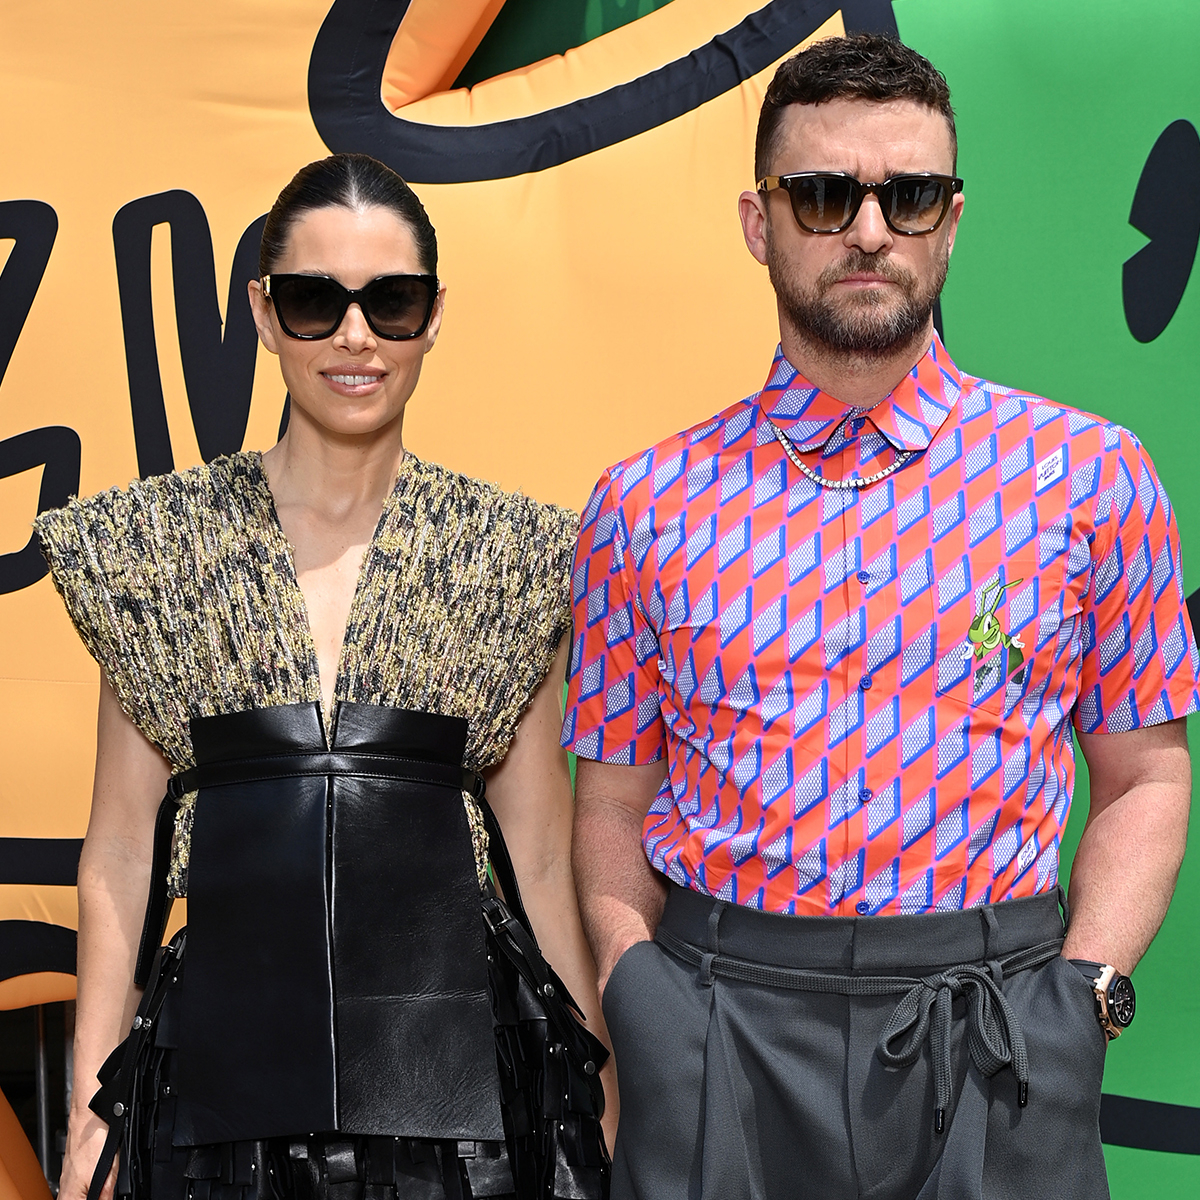 Justin Timberlake and Jessica Biel in Louis Vuitton - Louis